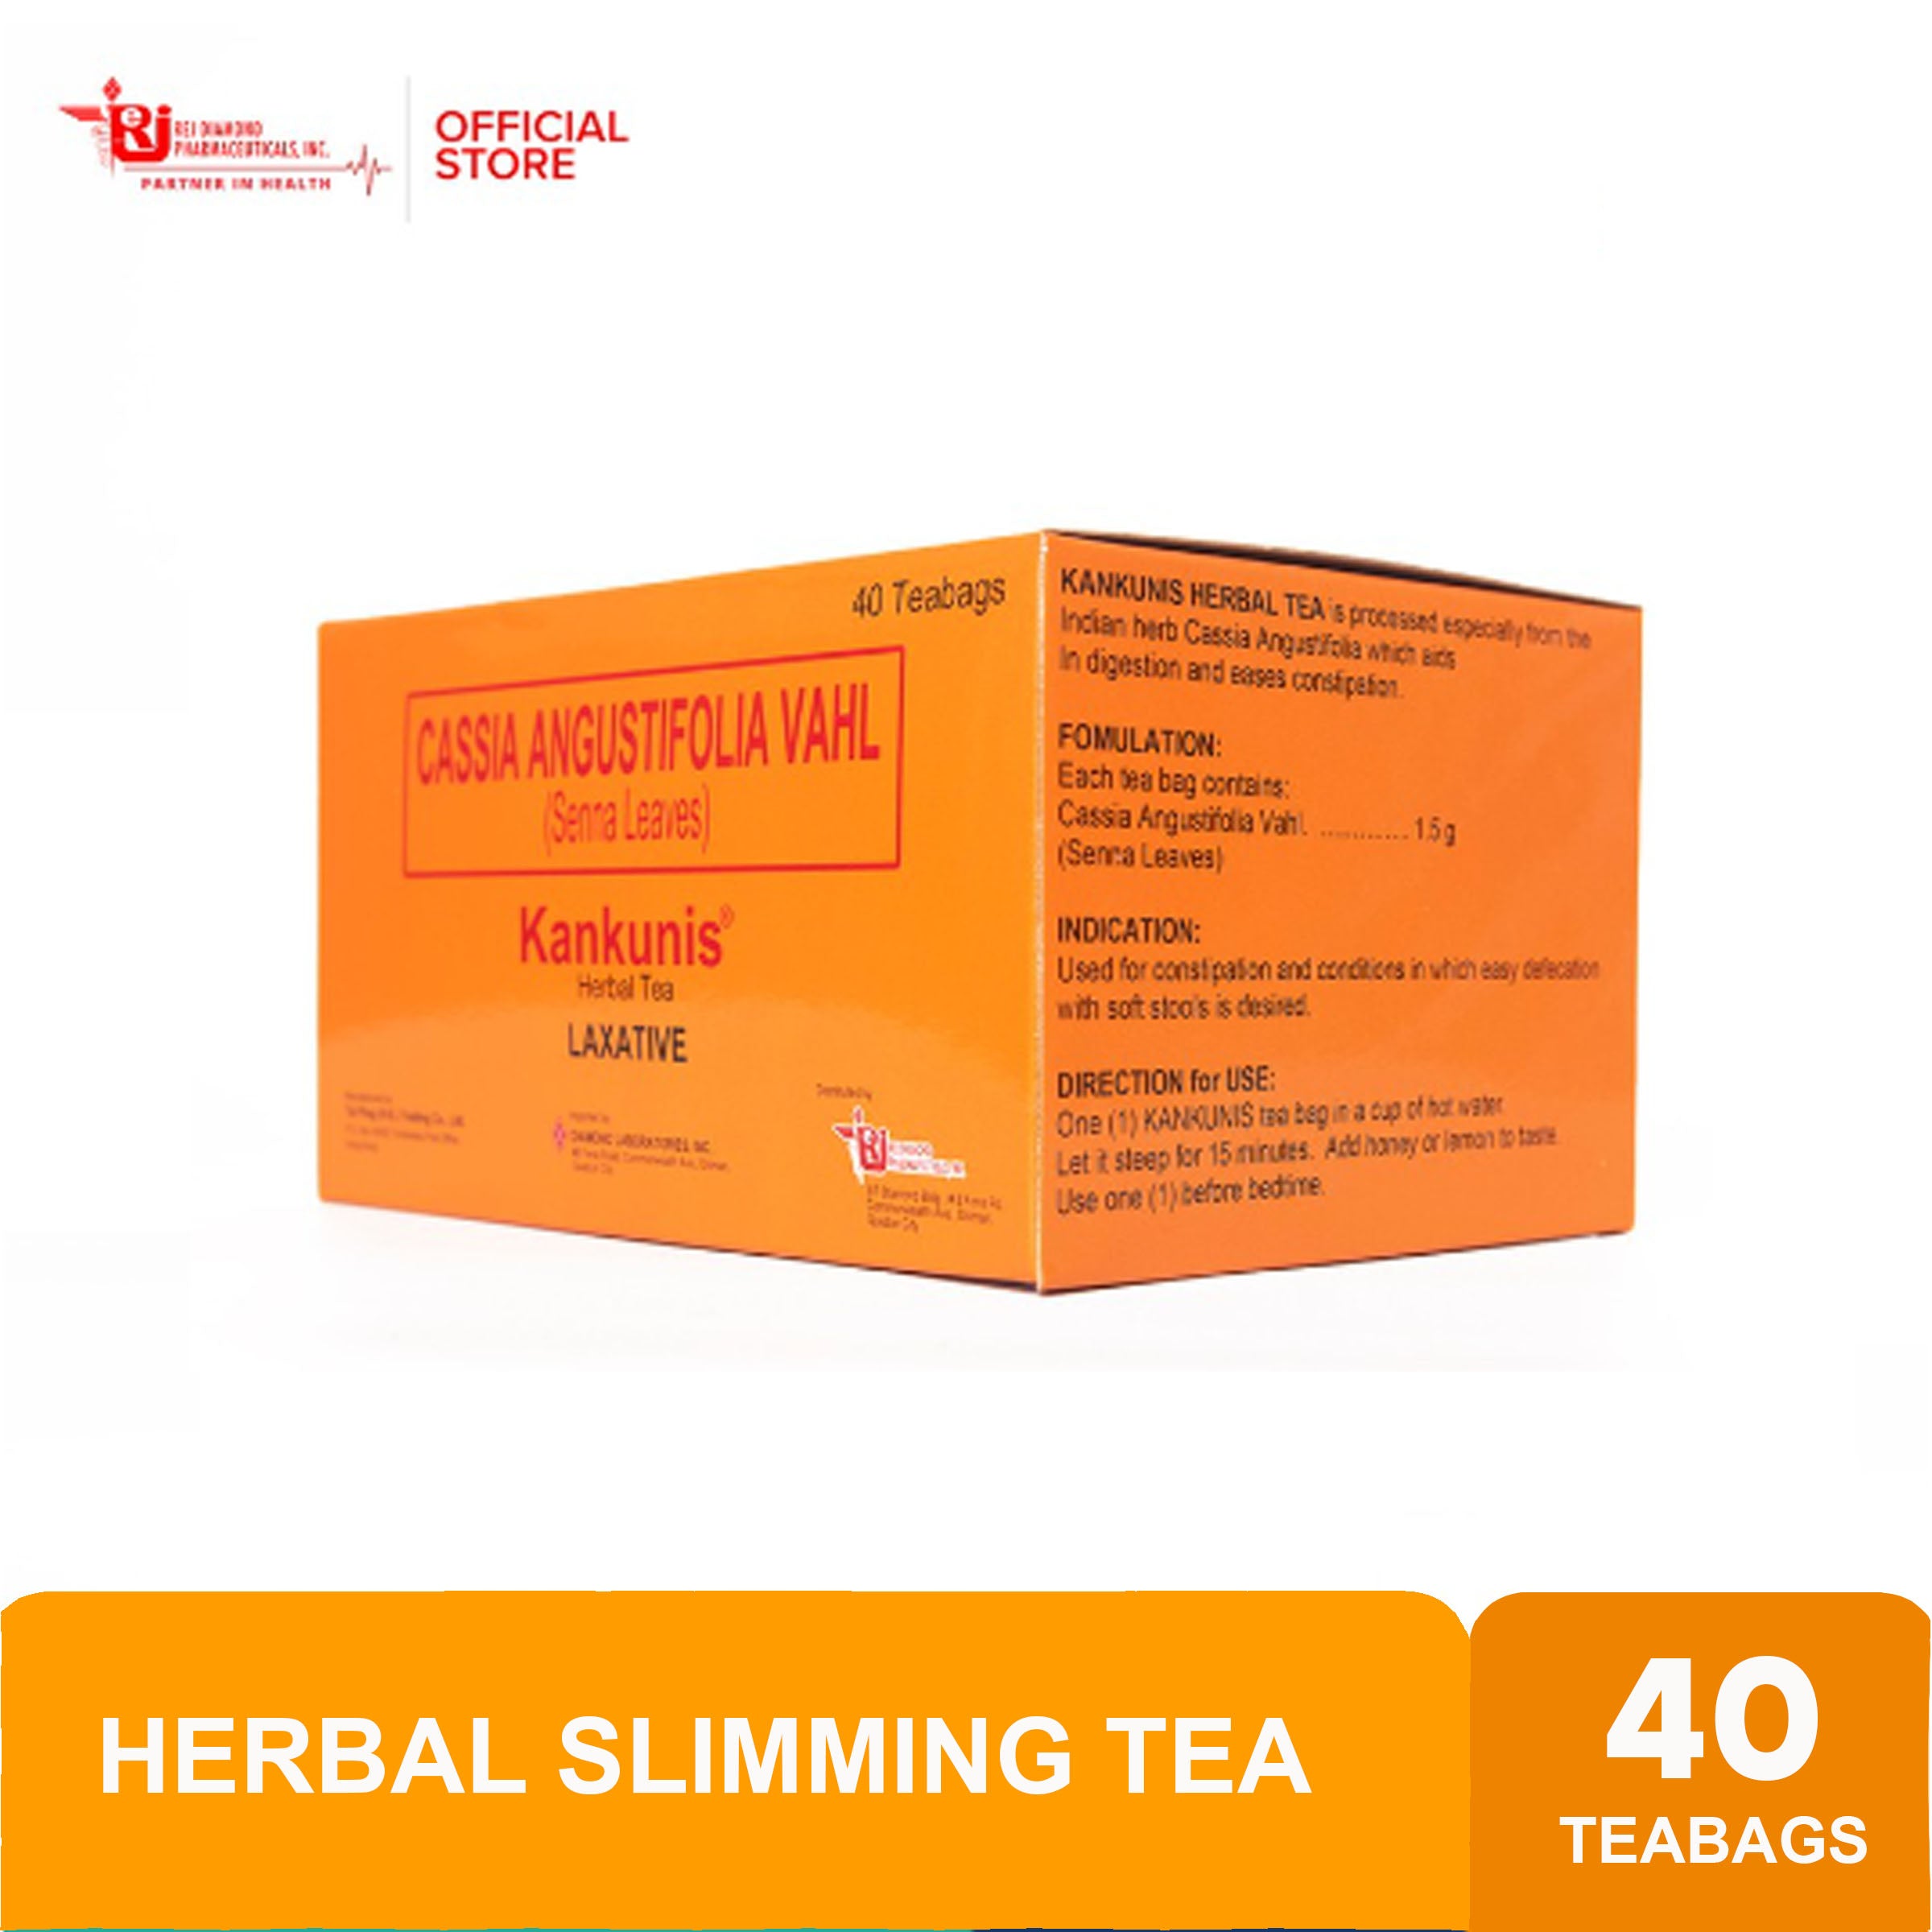 Kankunis Herbal Slimming Tea - 40 Teabags (Laxative and Detox)